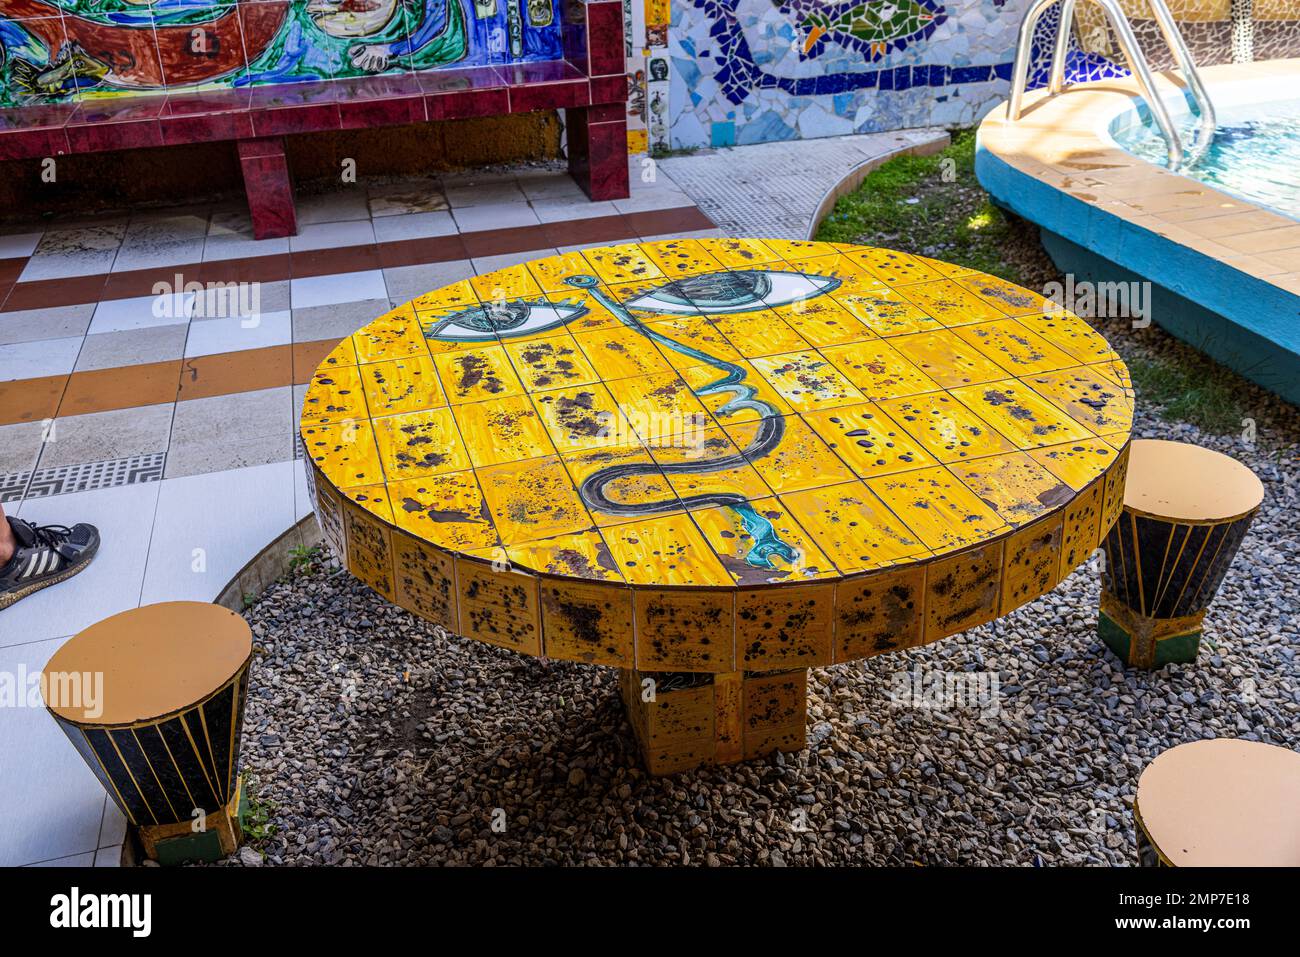 Tiled mosaic table in courtyard of workshop studio of Jose Fuster at Fusterlandia, 'Homage to Gaudi', Jaimanitas, Havana, Cuba Stock Photo